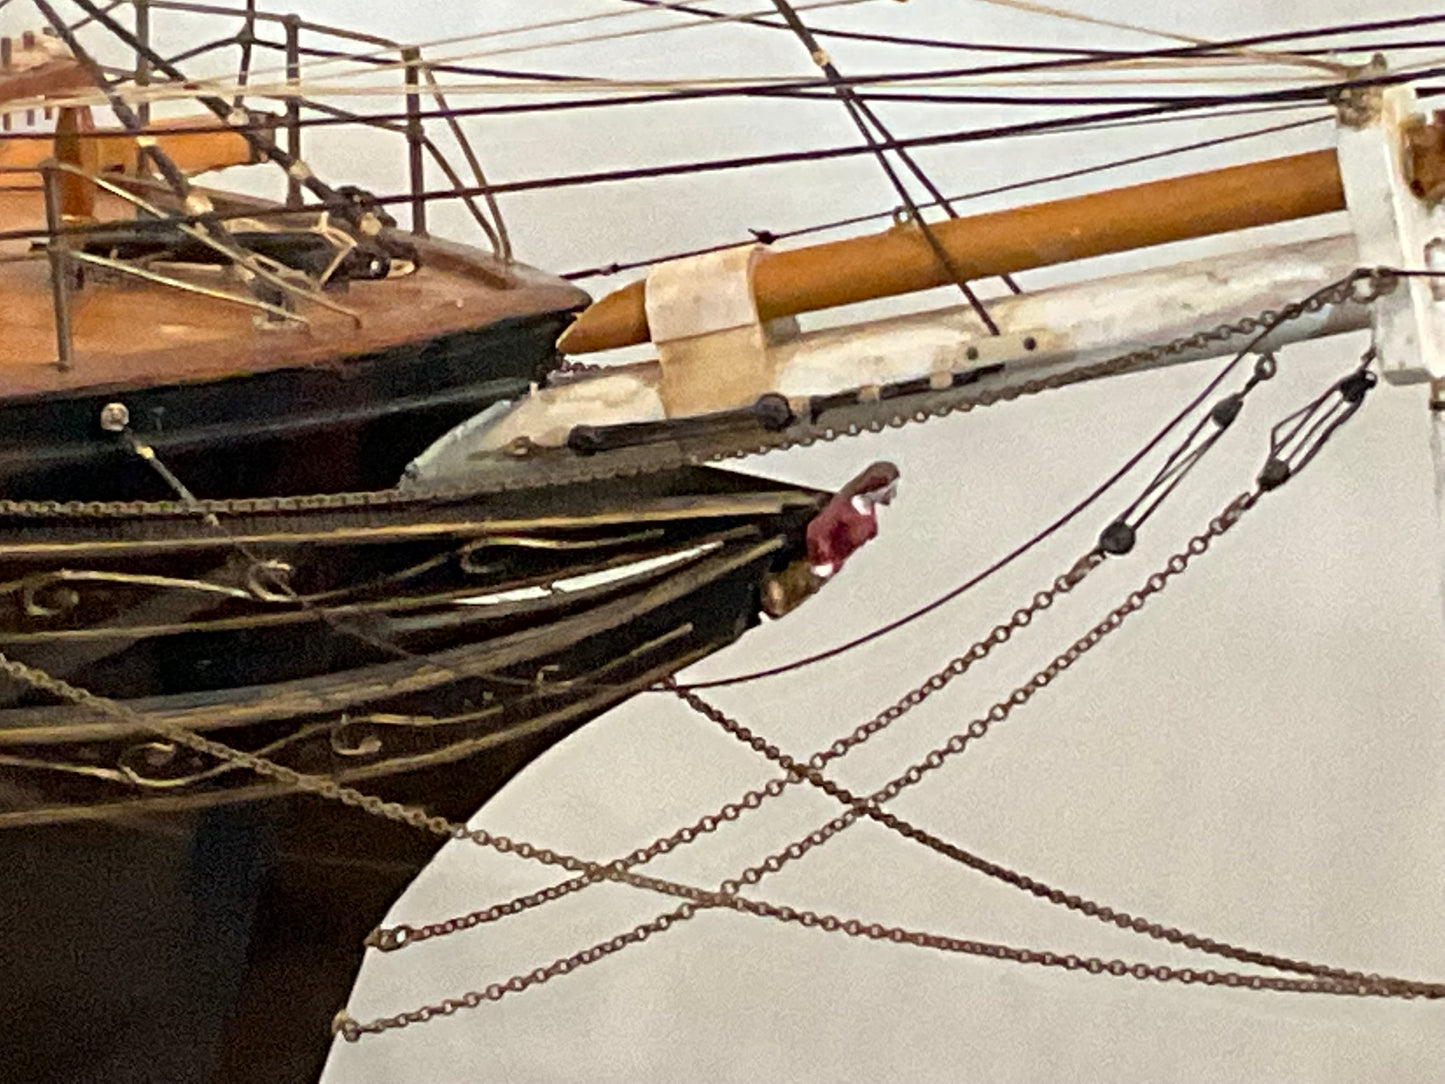 Ship Model Torrens - Lannan Gallery